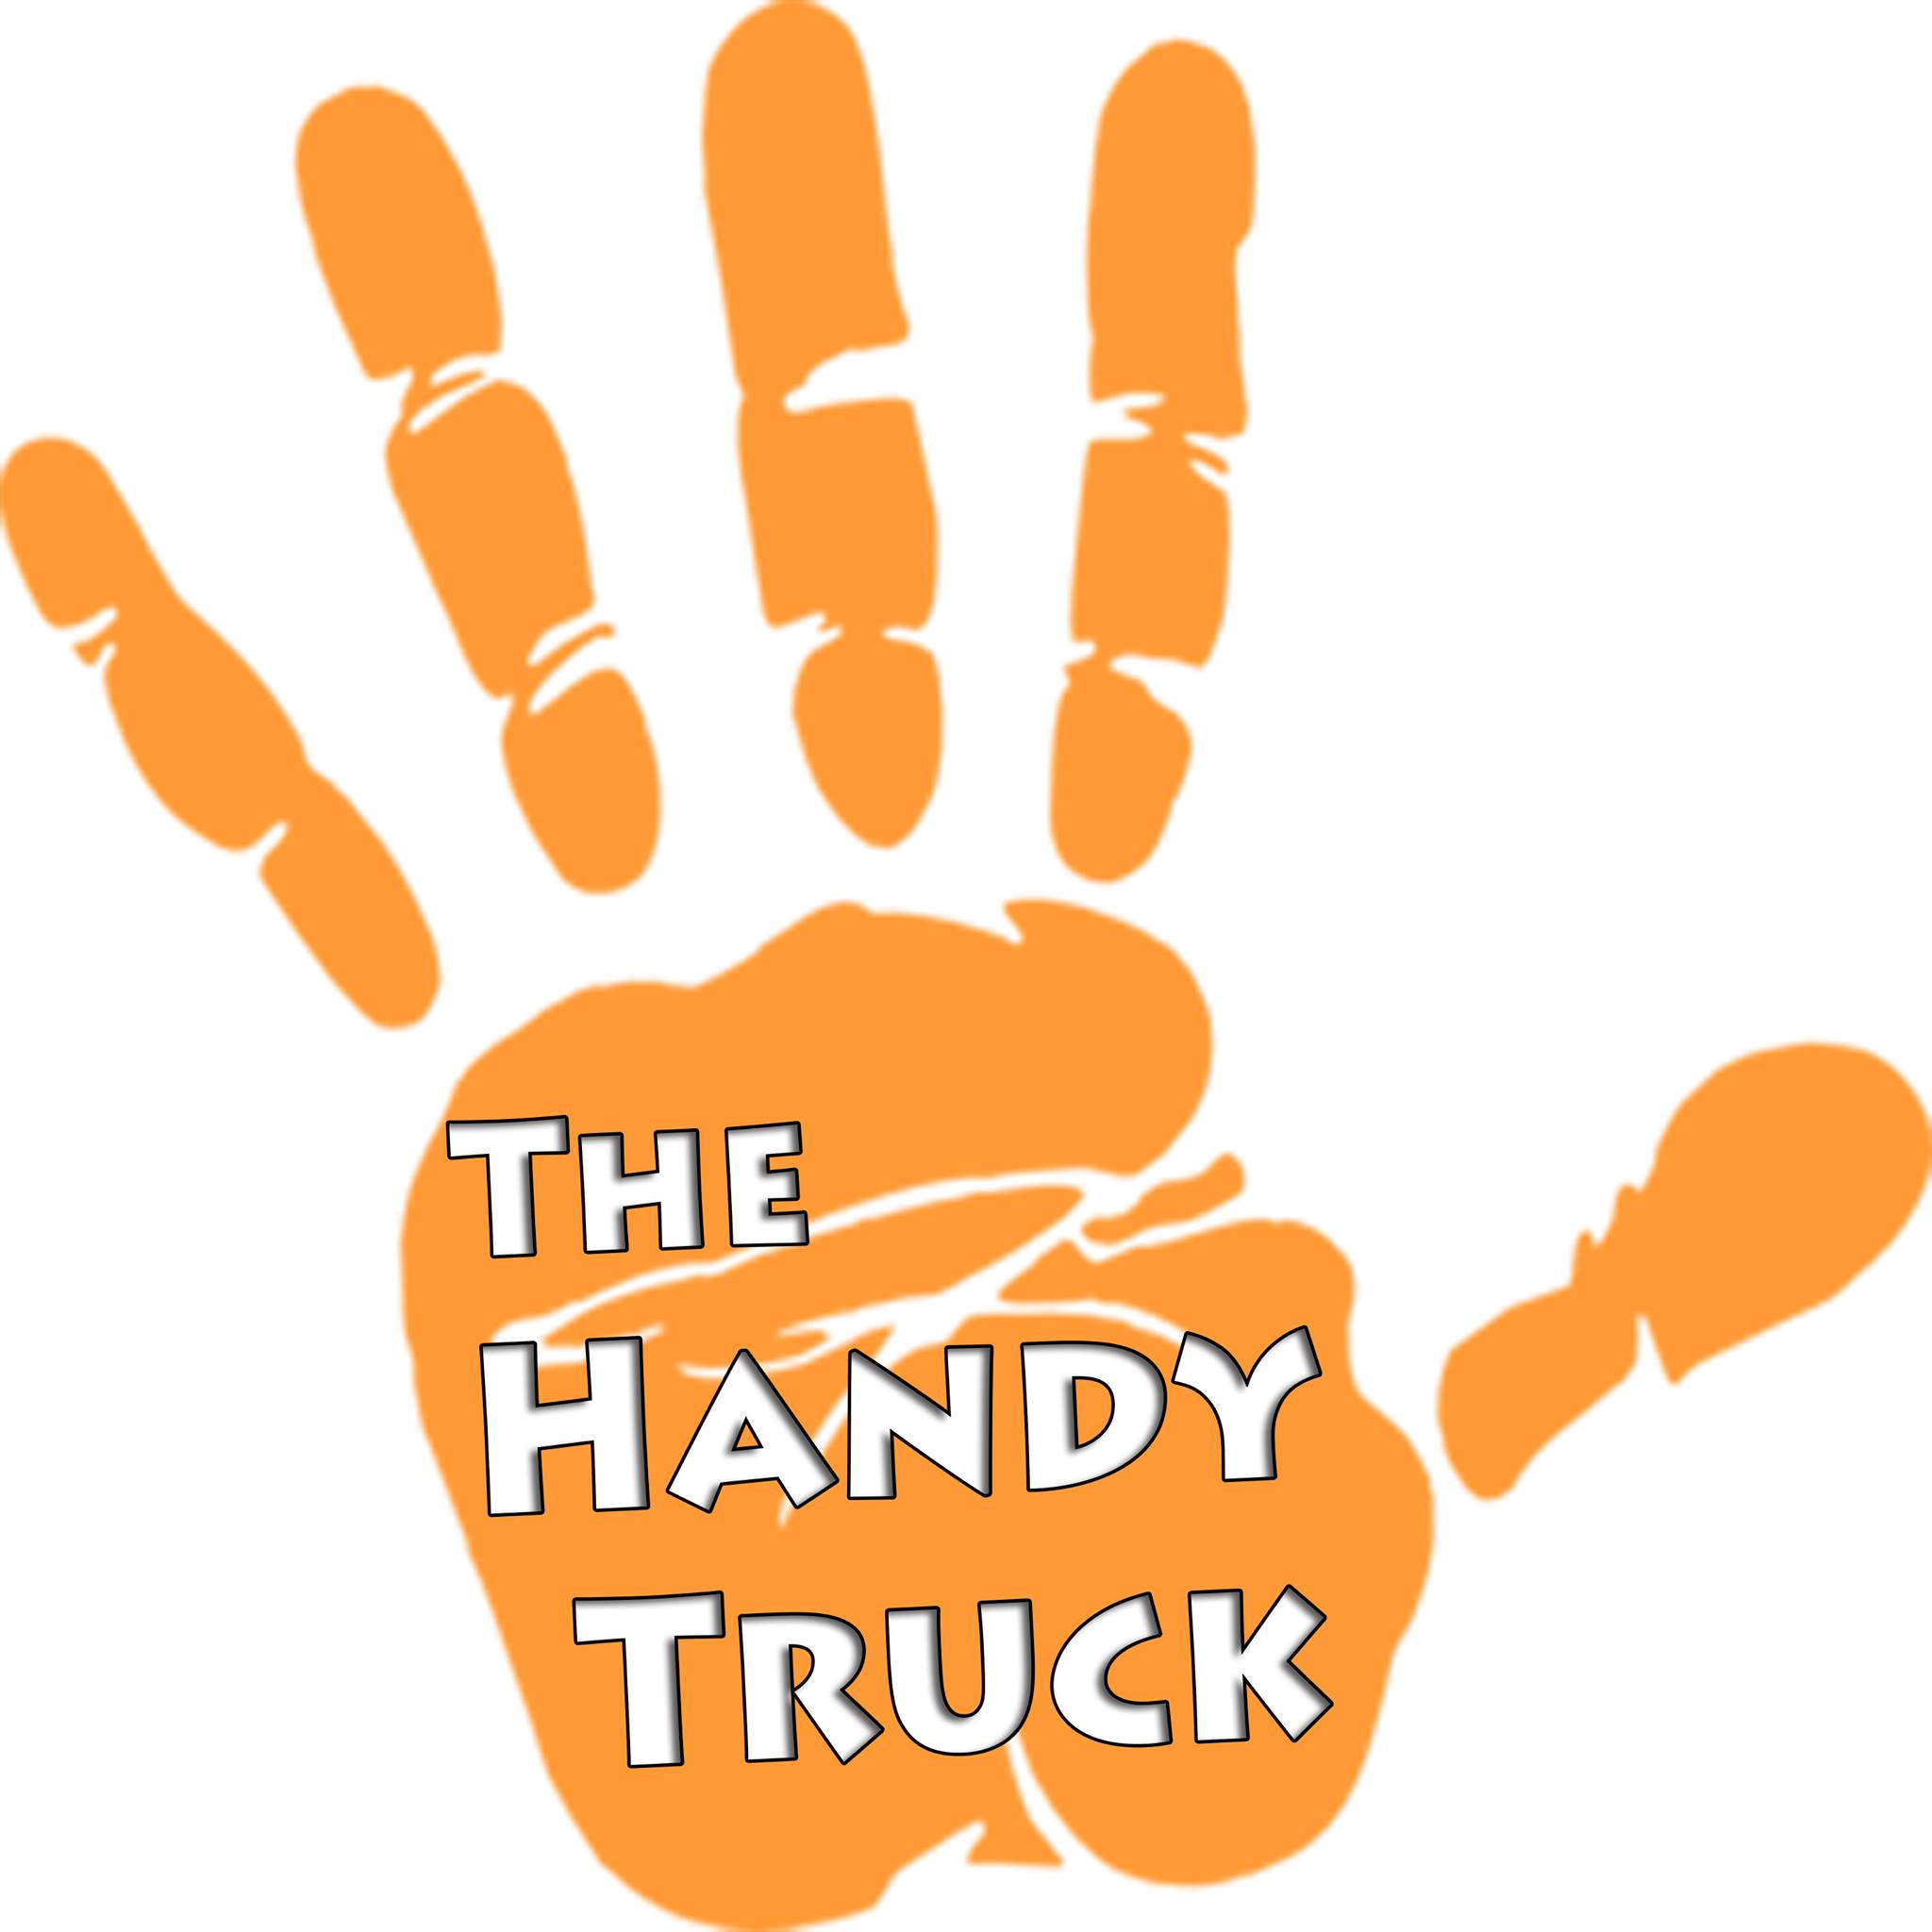 The Handy Truck